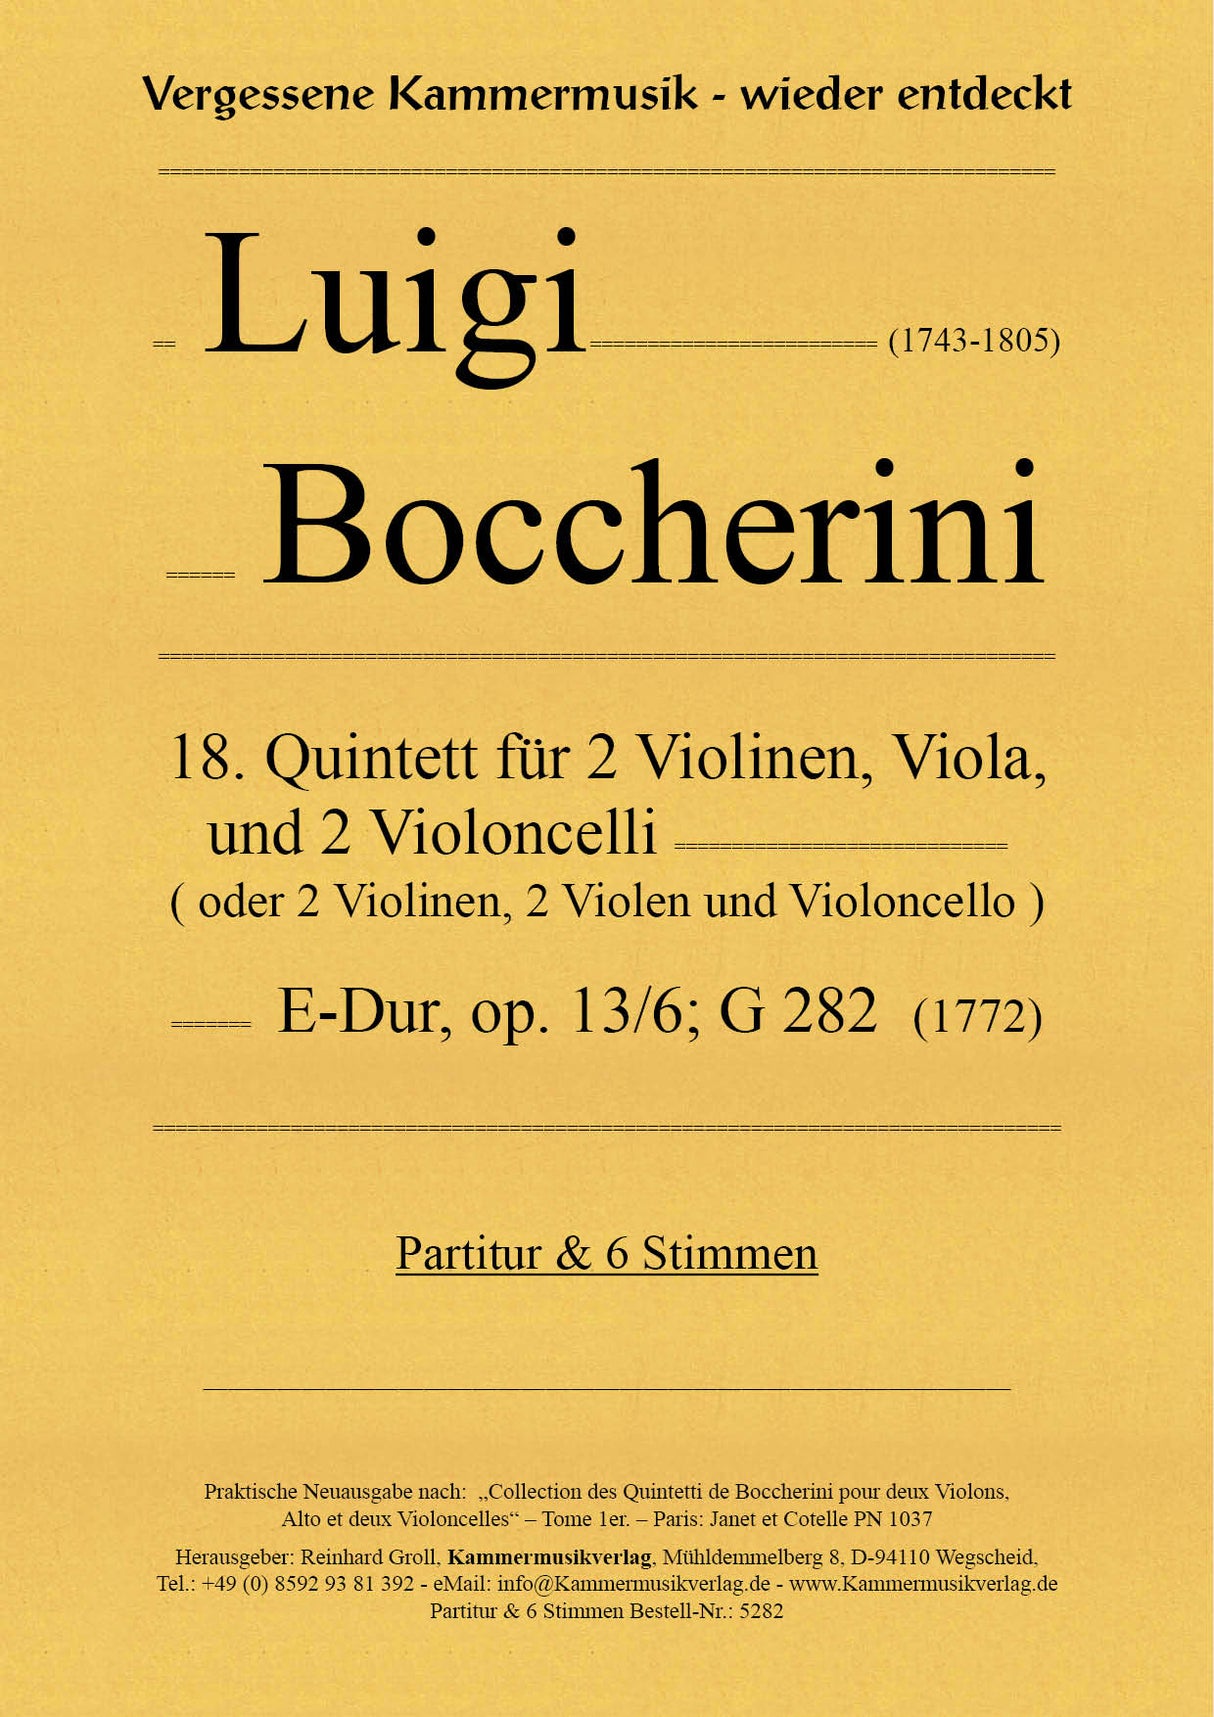 Boccherini: String Quintet in E Major, G 282, Op. 13, No. 6